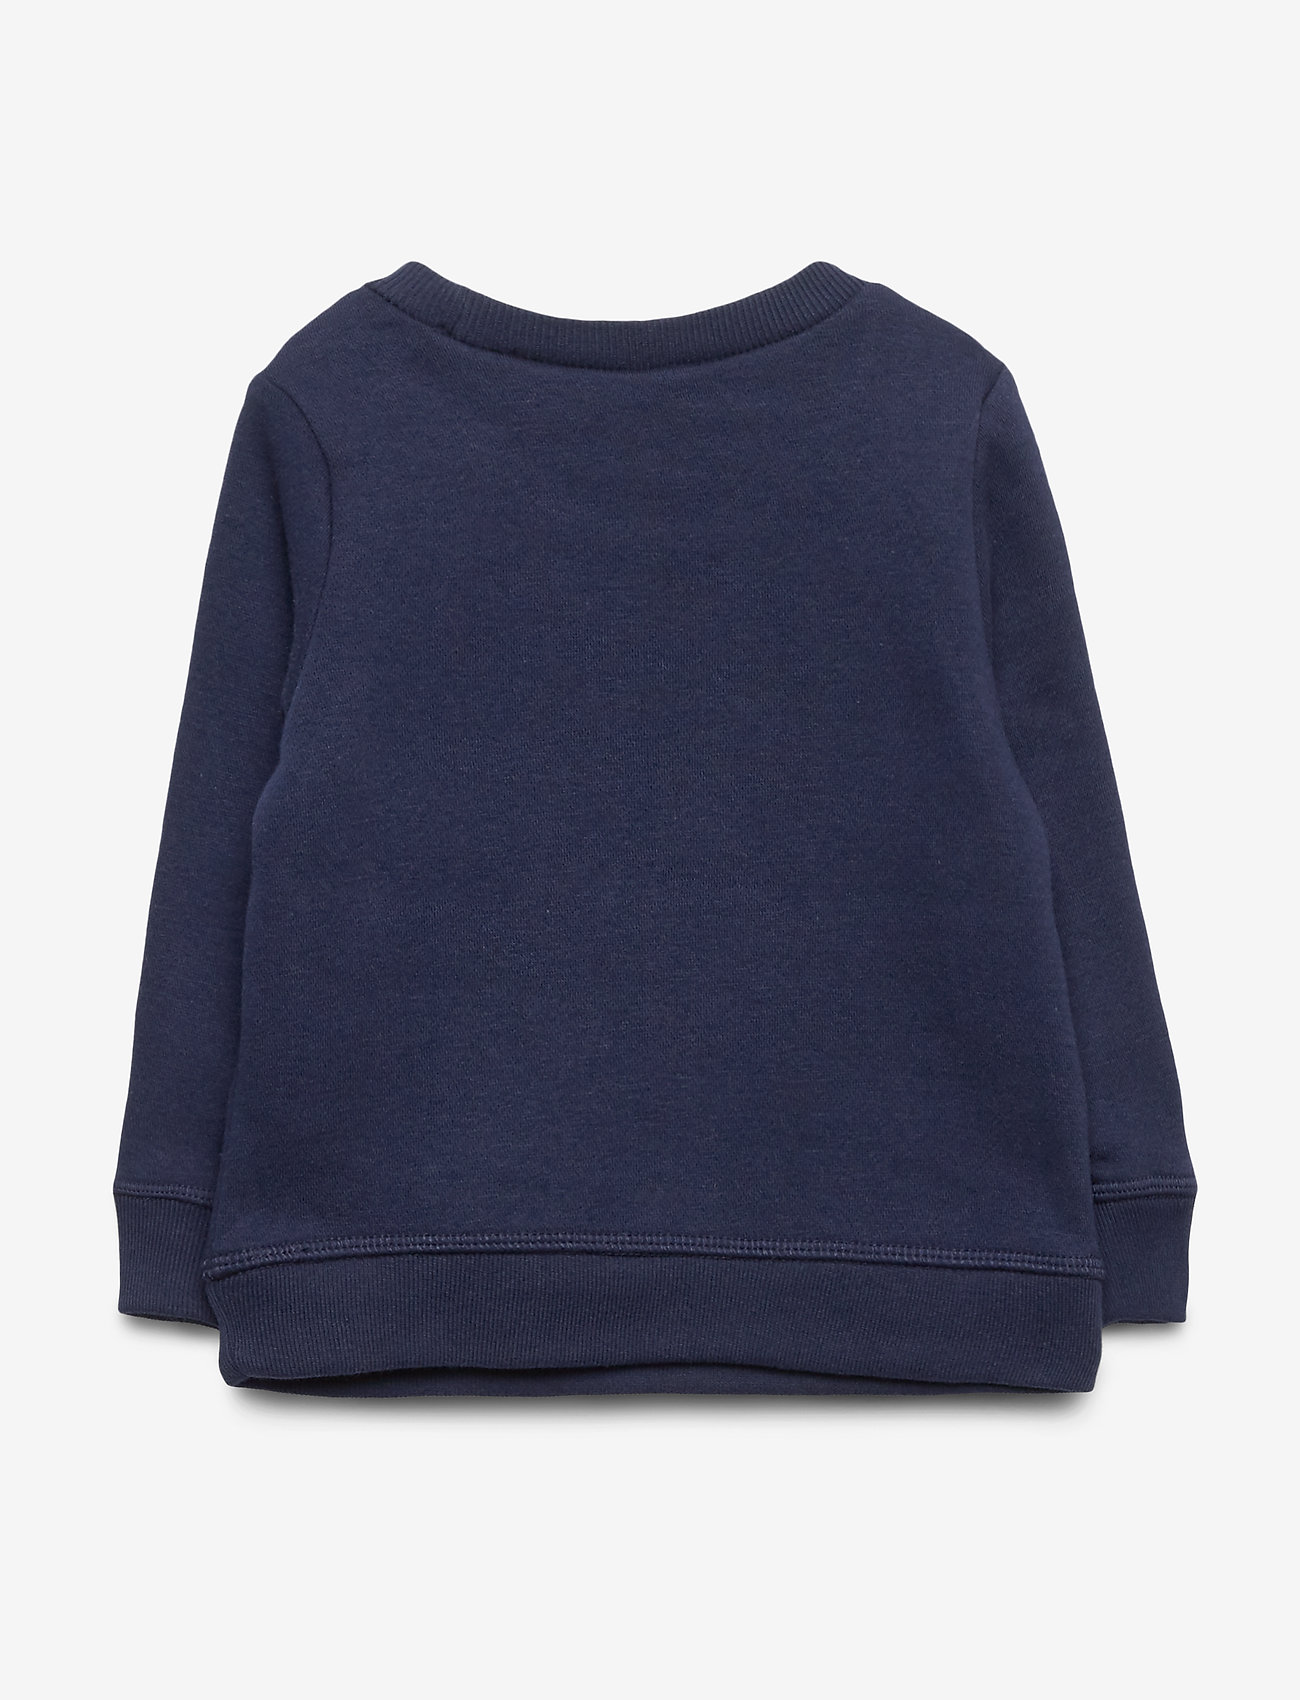 gap navy blue sweater